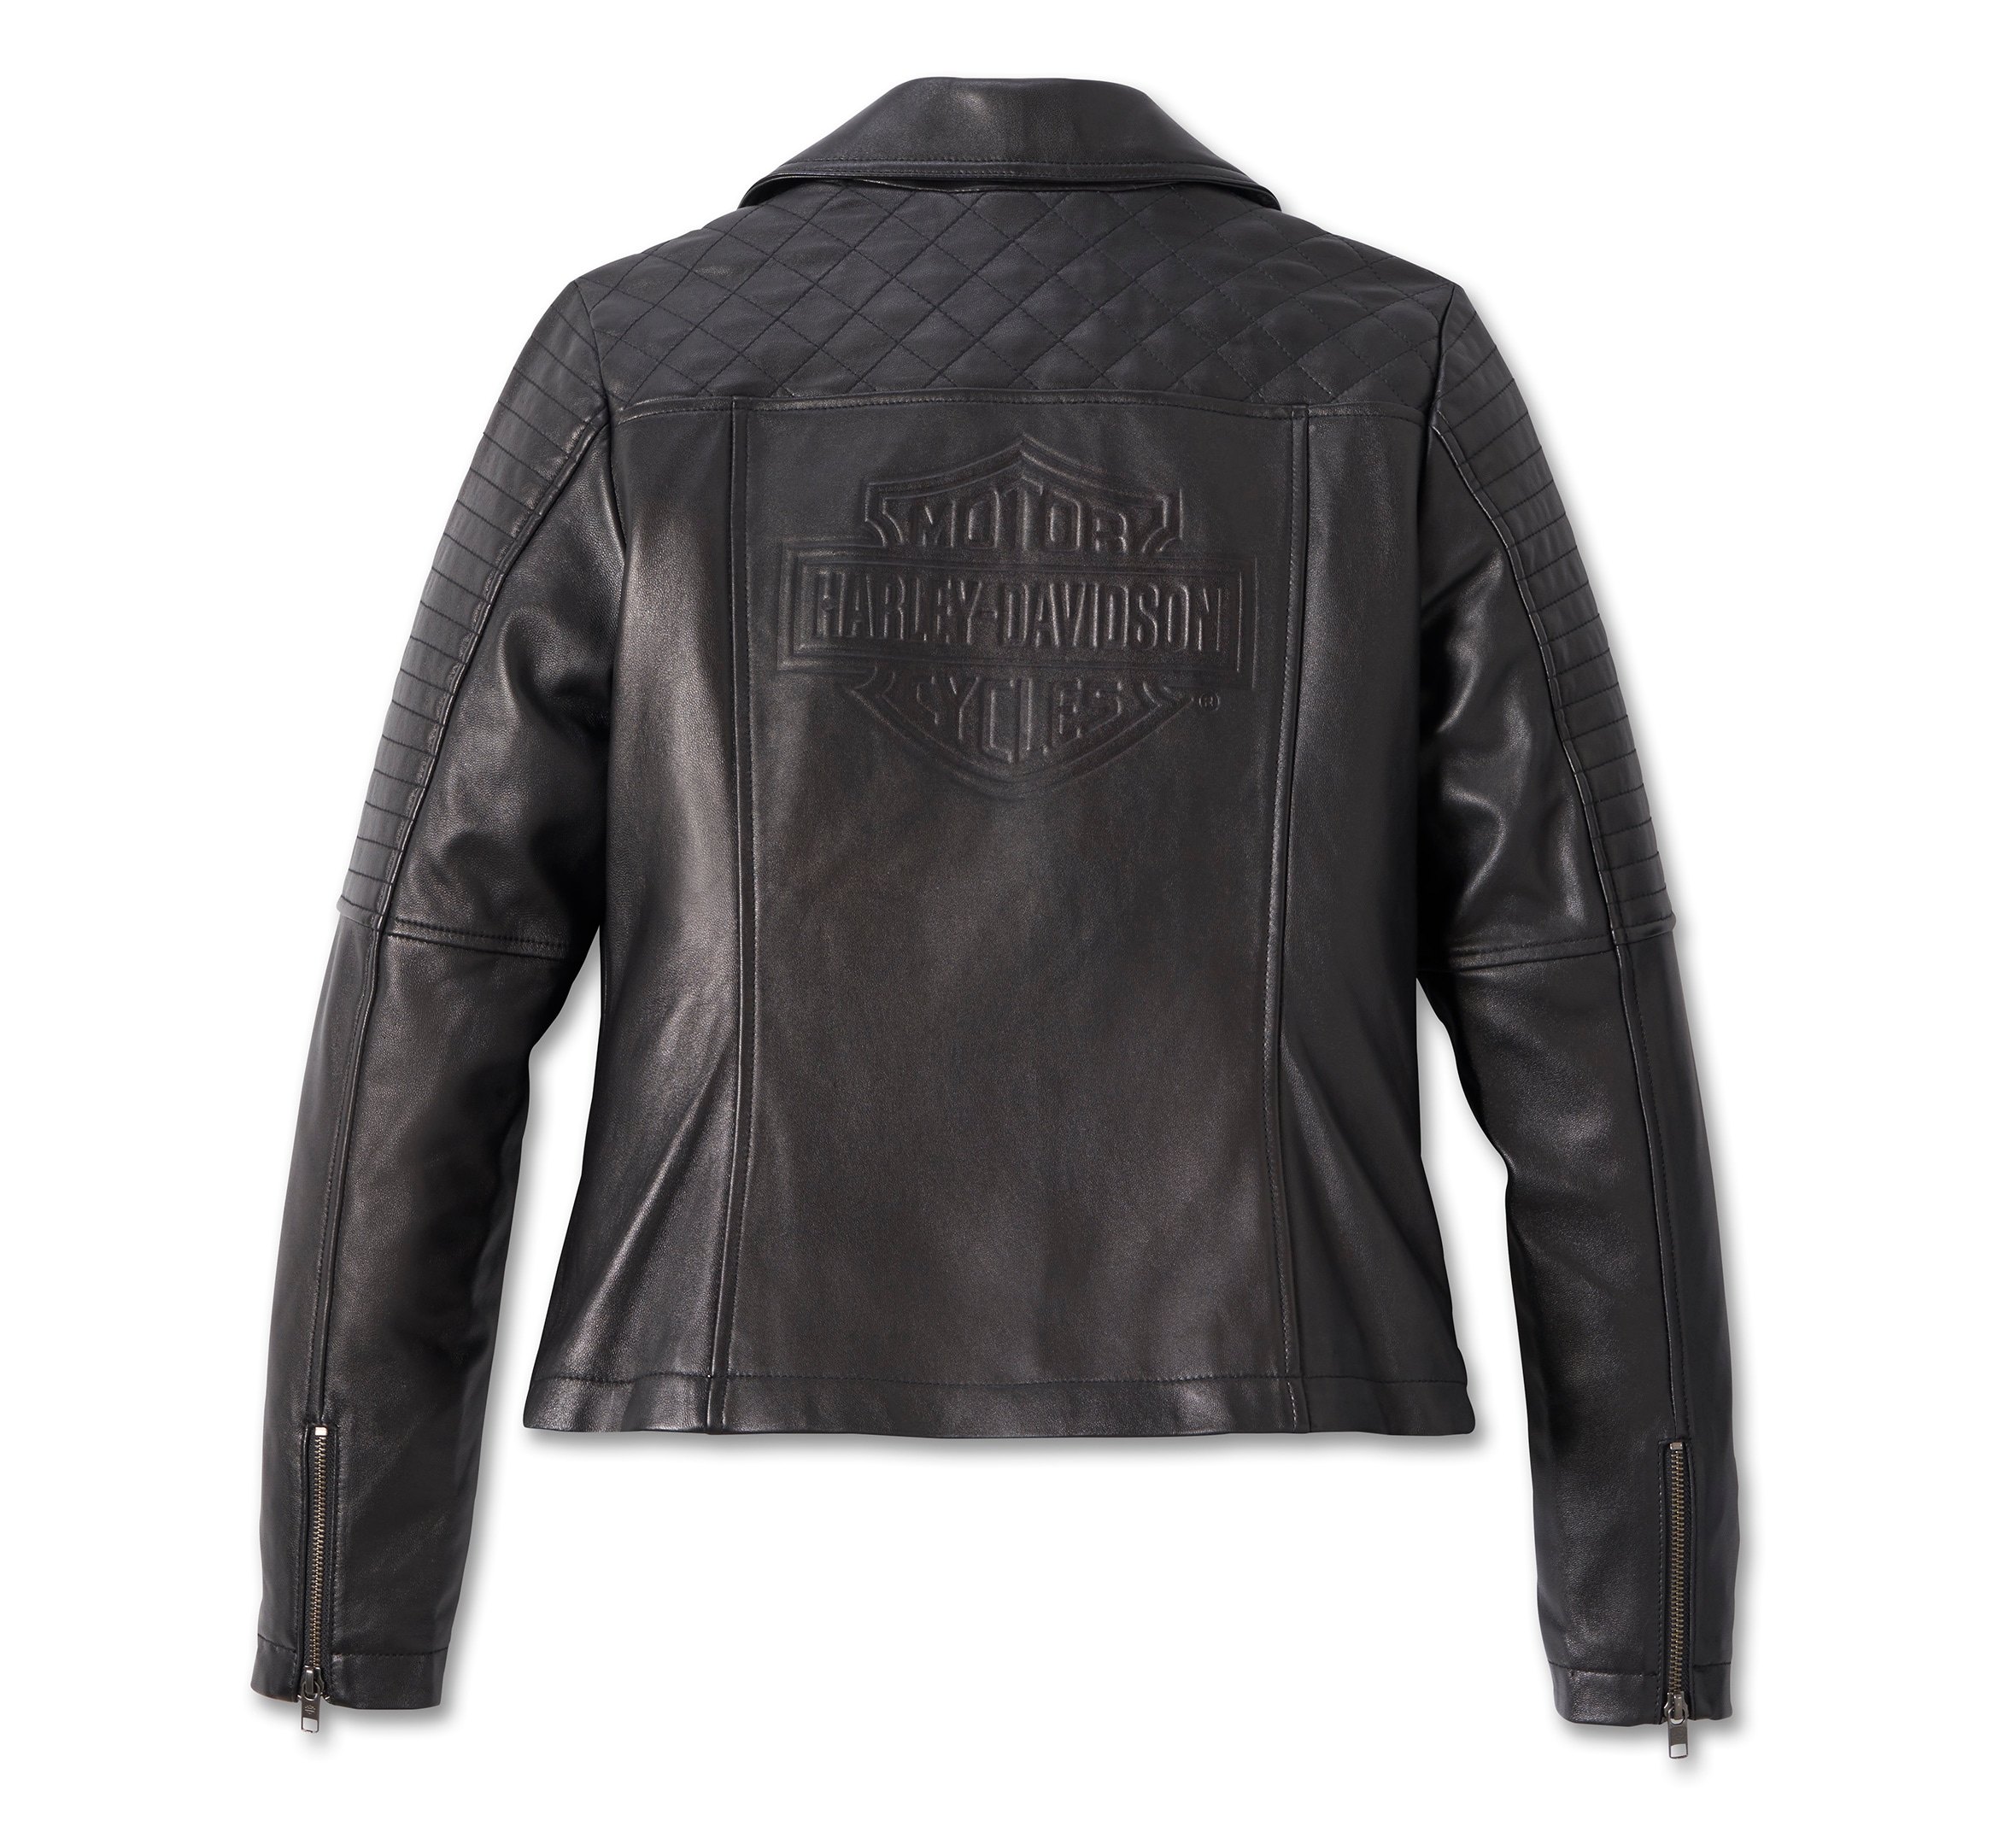 Harley Davidson Women’s Classic Biker Debossed Leather Jacket, Black